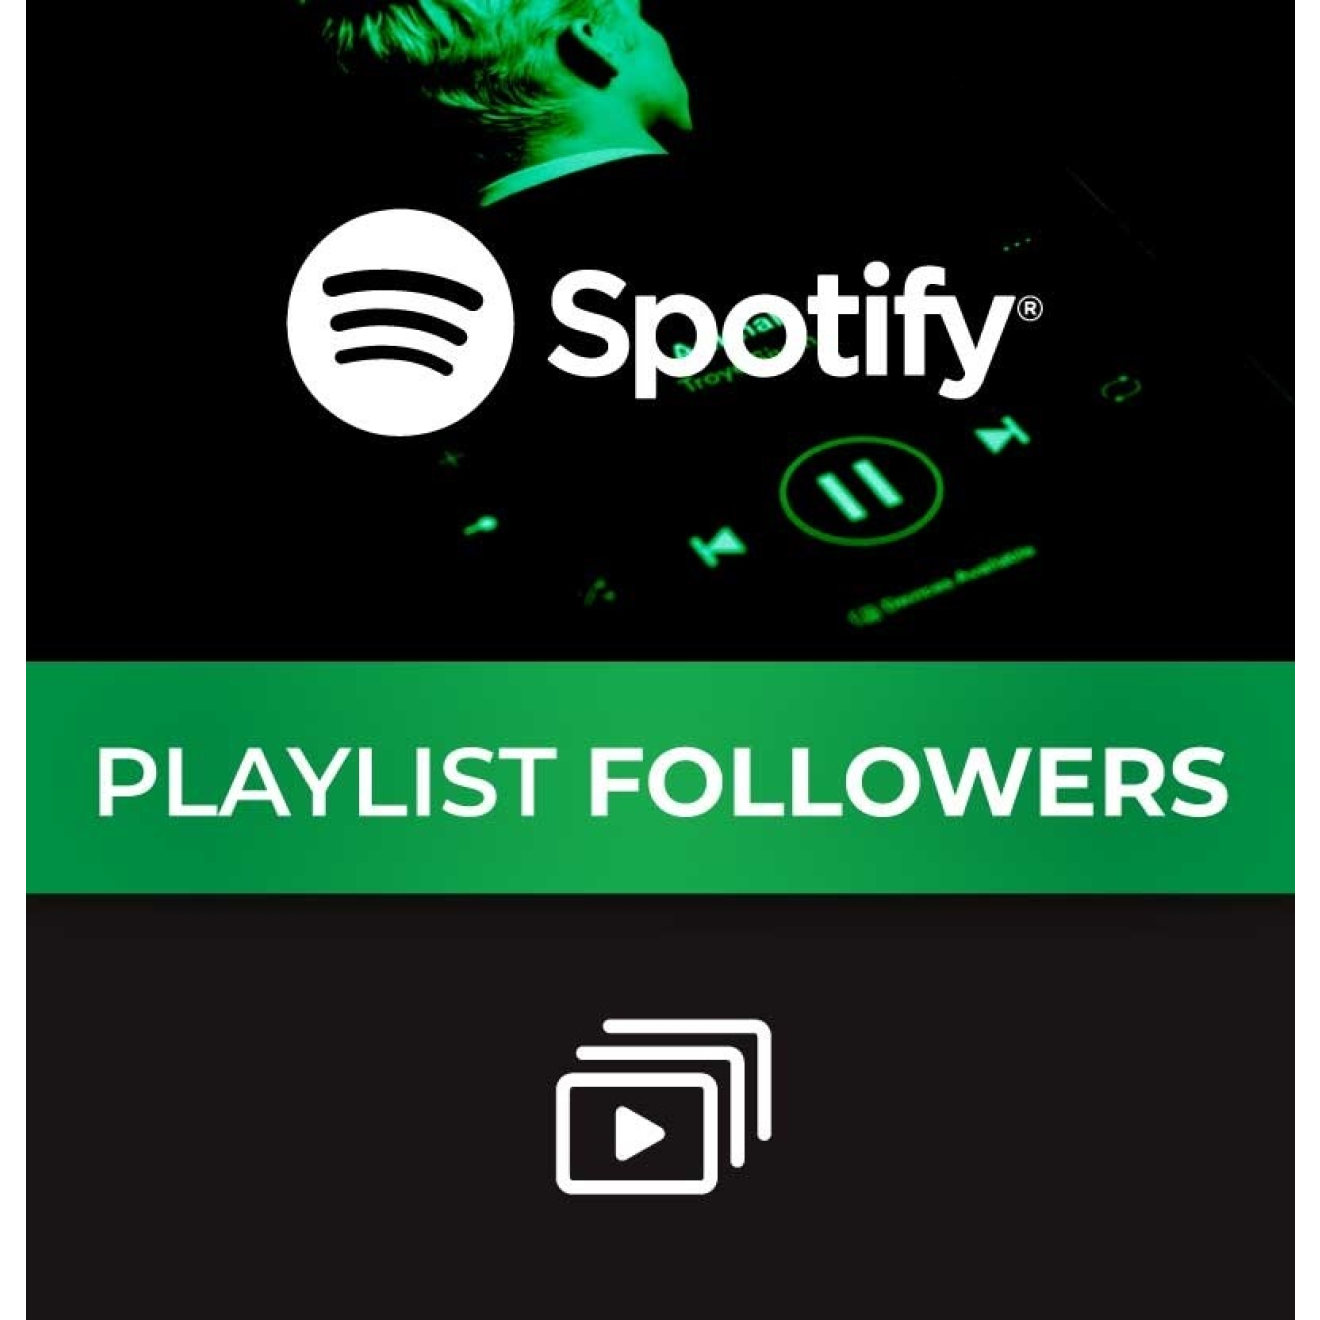 750 Spotify Playlist Followers / Abonnenten für Dich